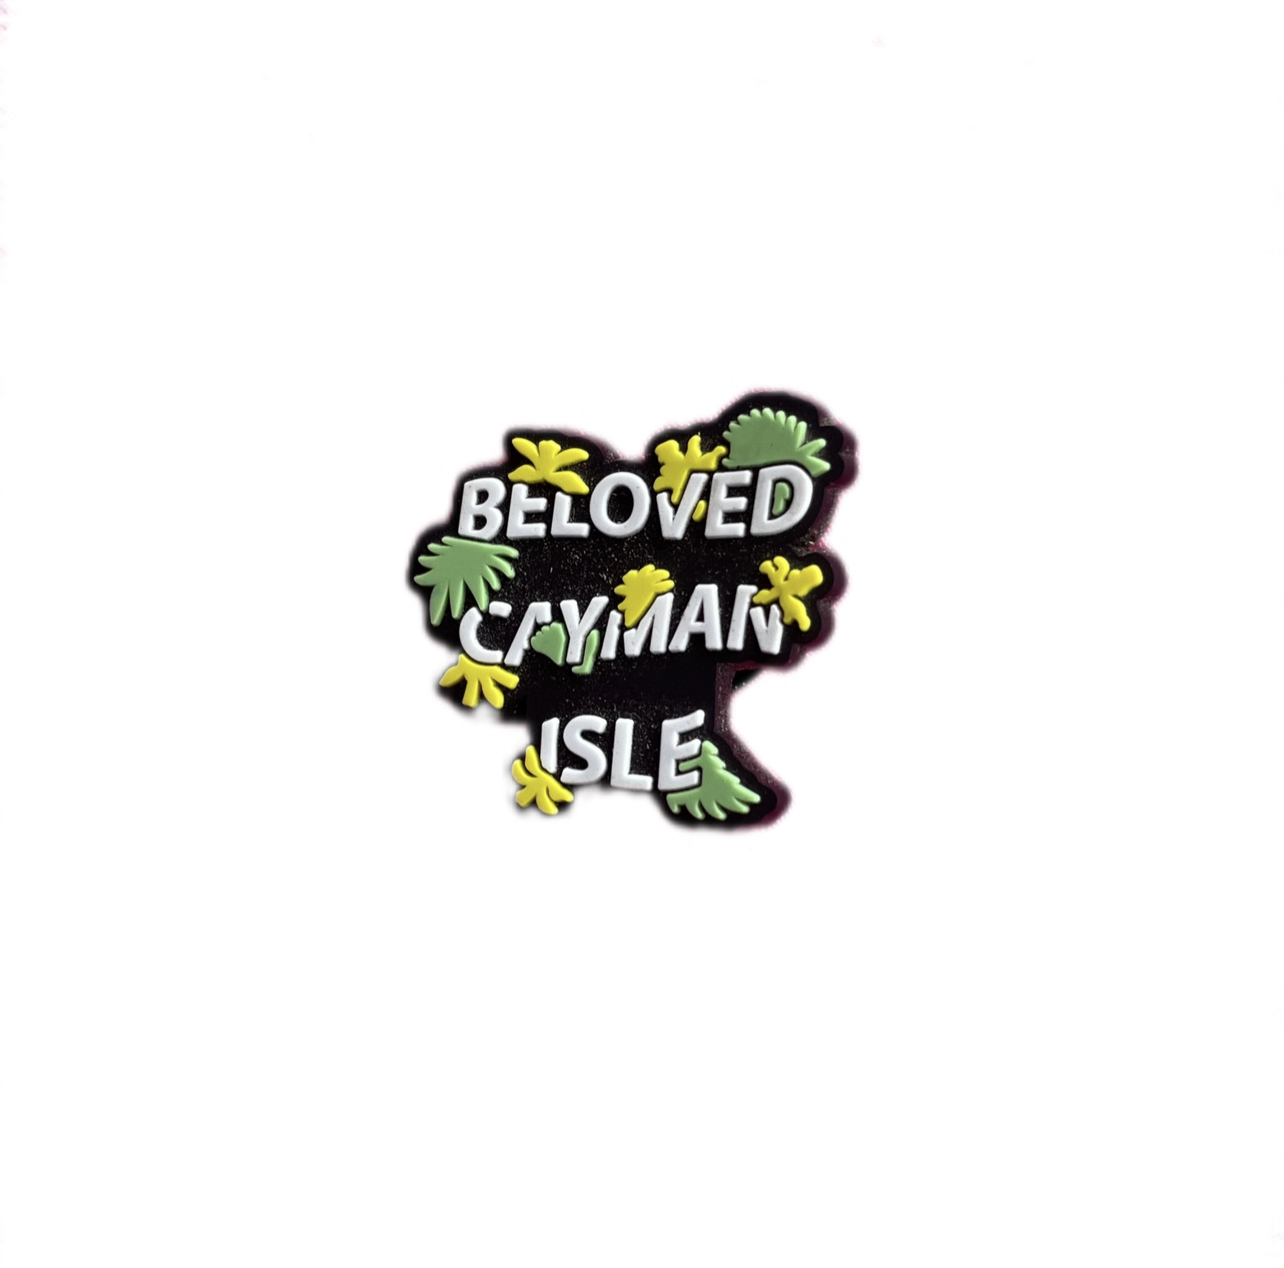 “BELOVED CAYMAN ISLE” Croc Charm